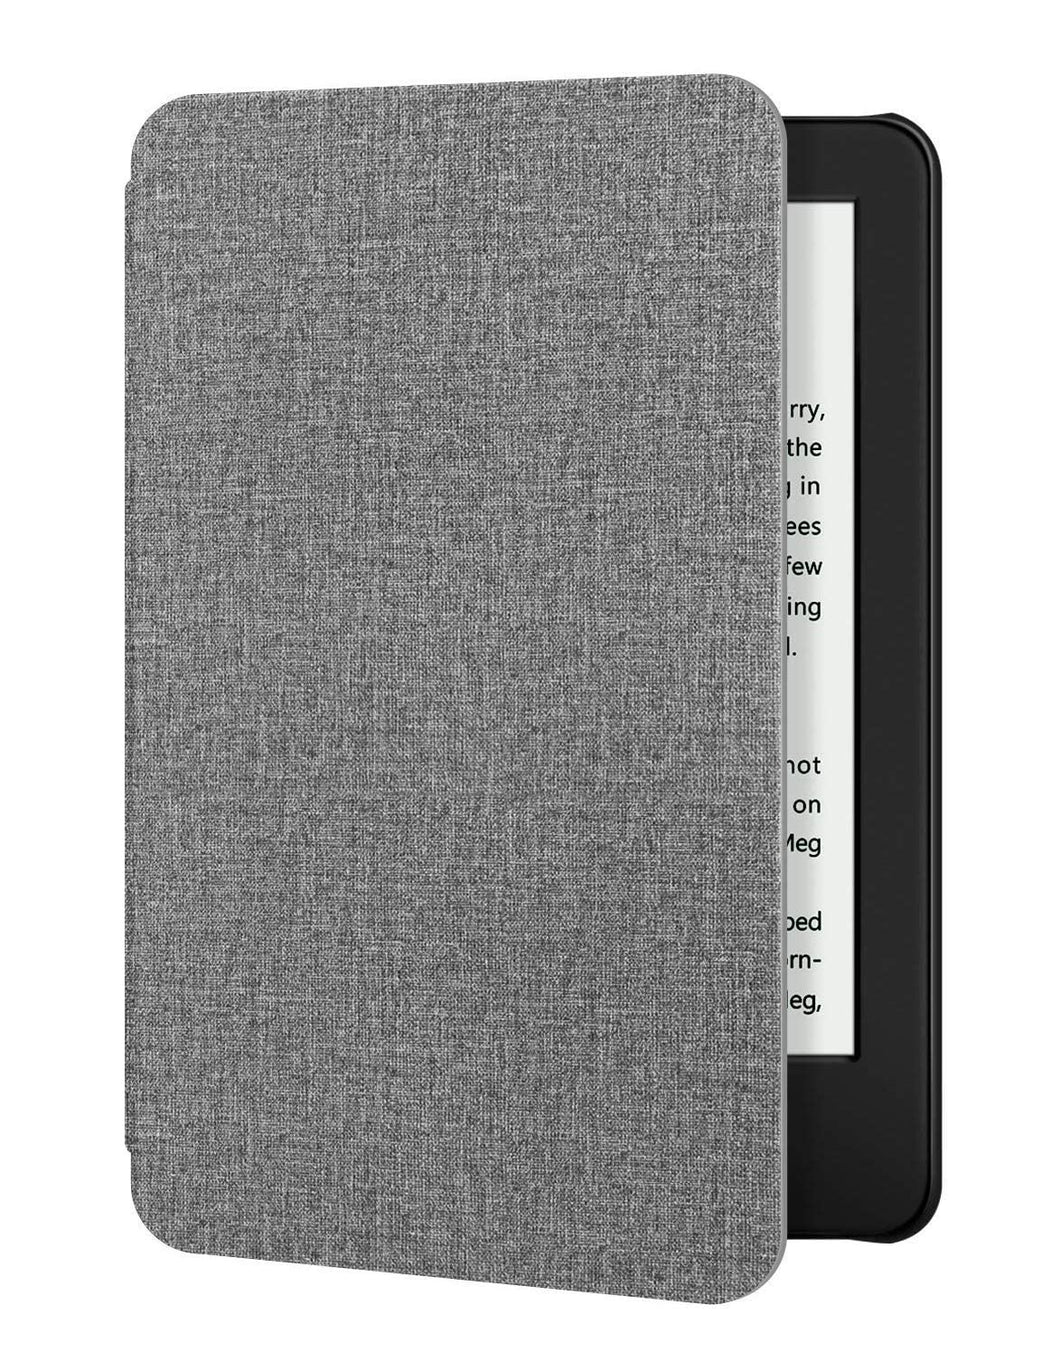 ProElite Premium Nylon Fabric Smart Flip case Cover for All New Amazon Kindle Paperwhite 6